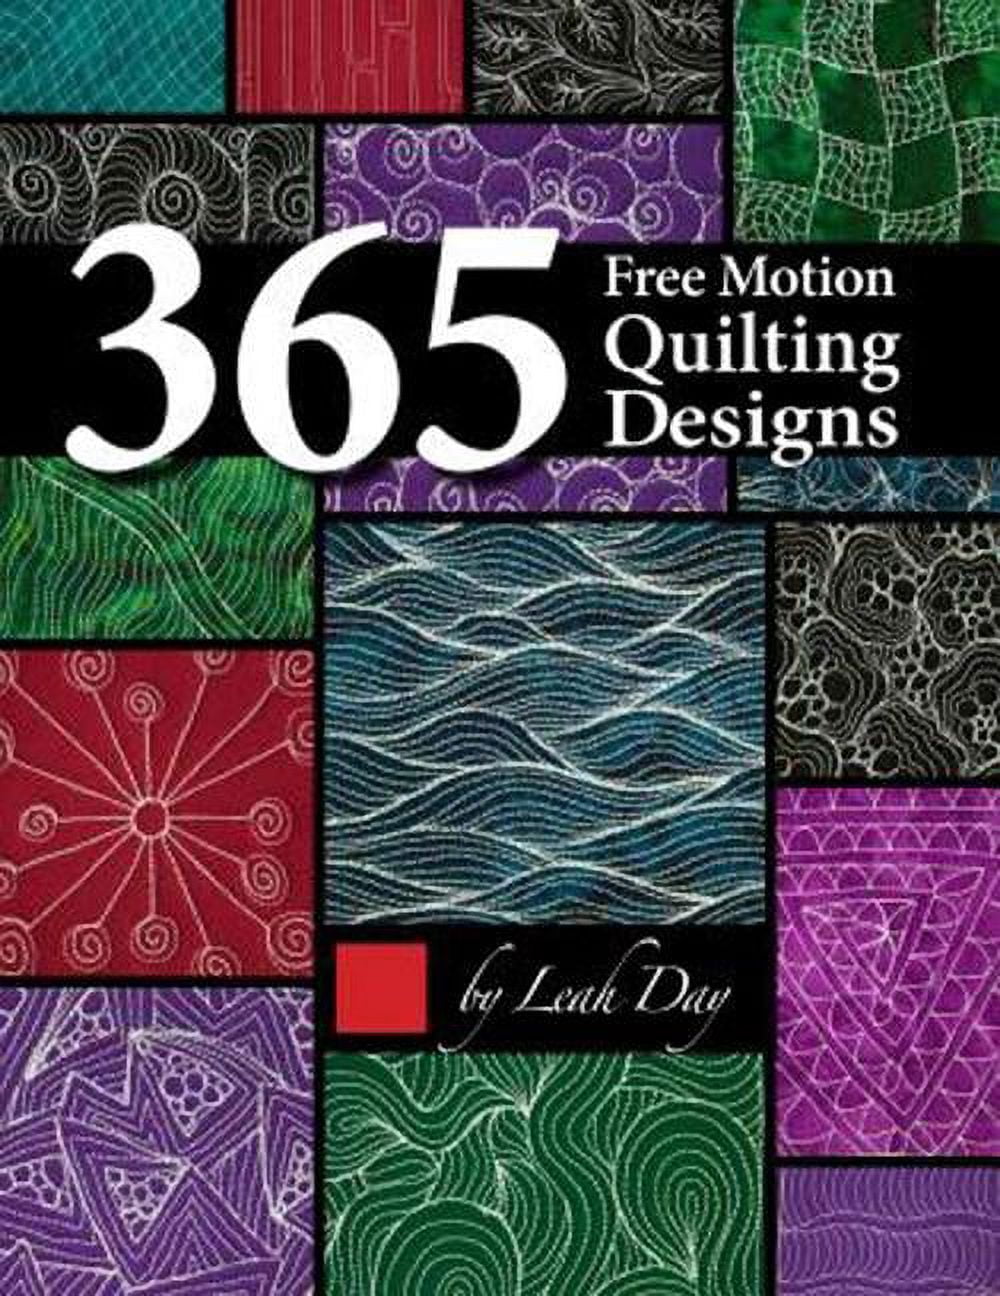 365 Free Motion Quilting Designs (Paperback) - Walmart.com